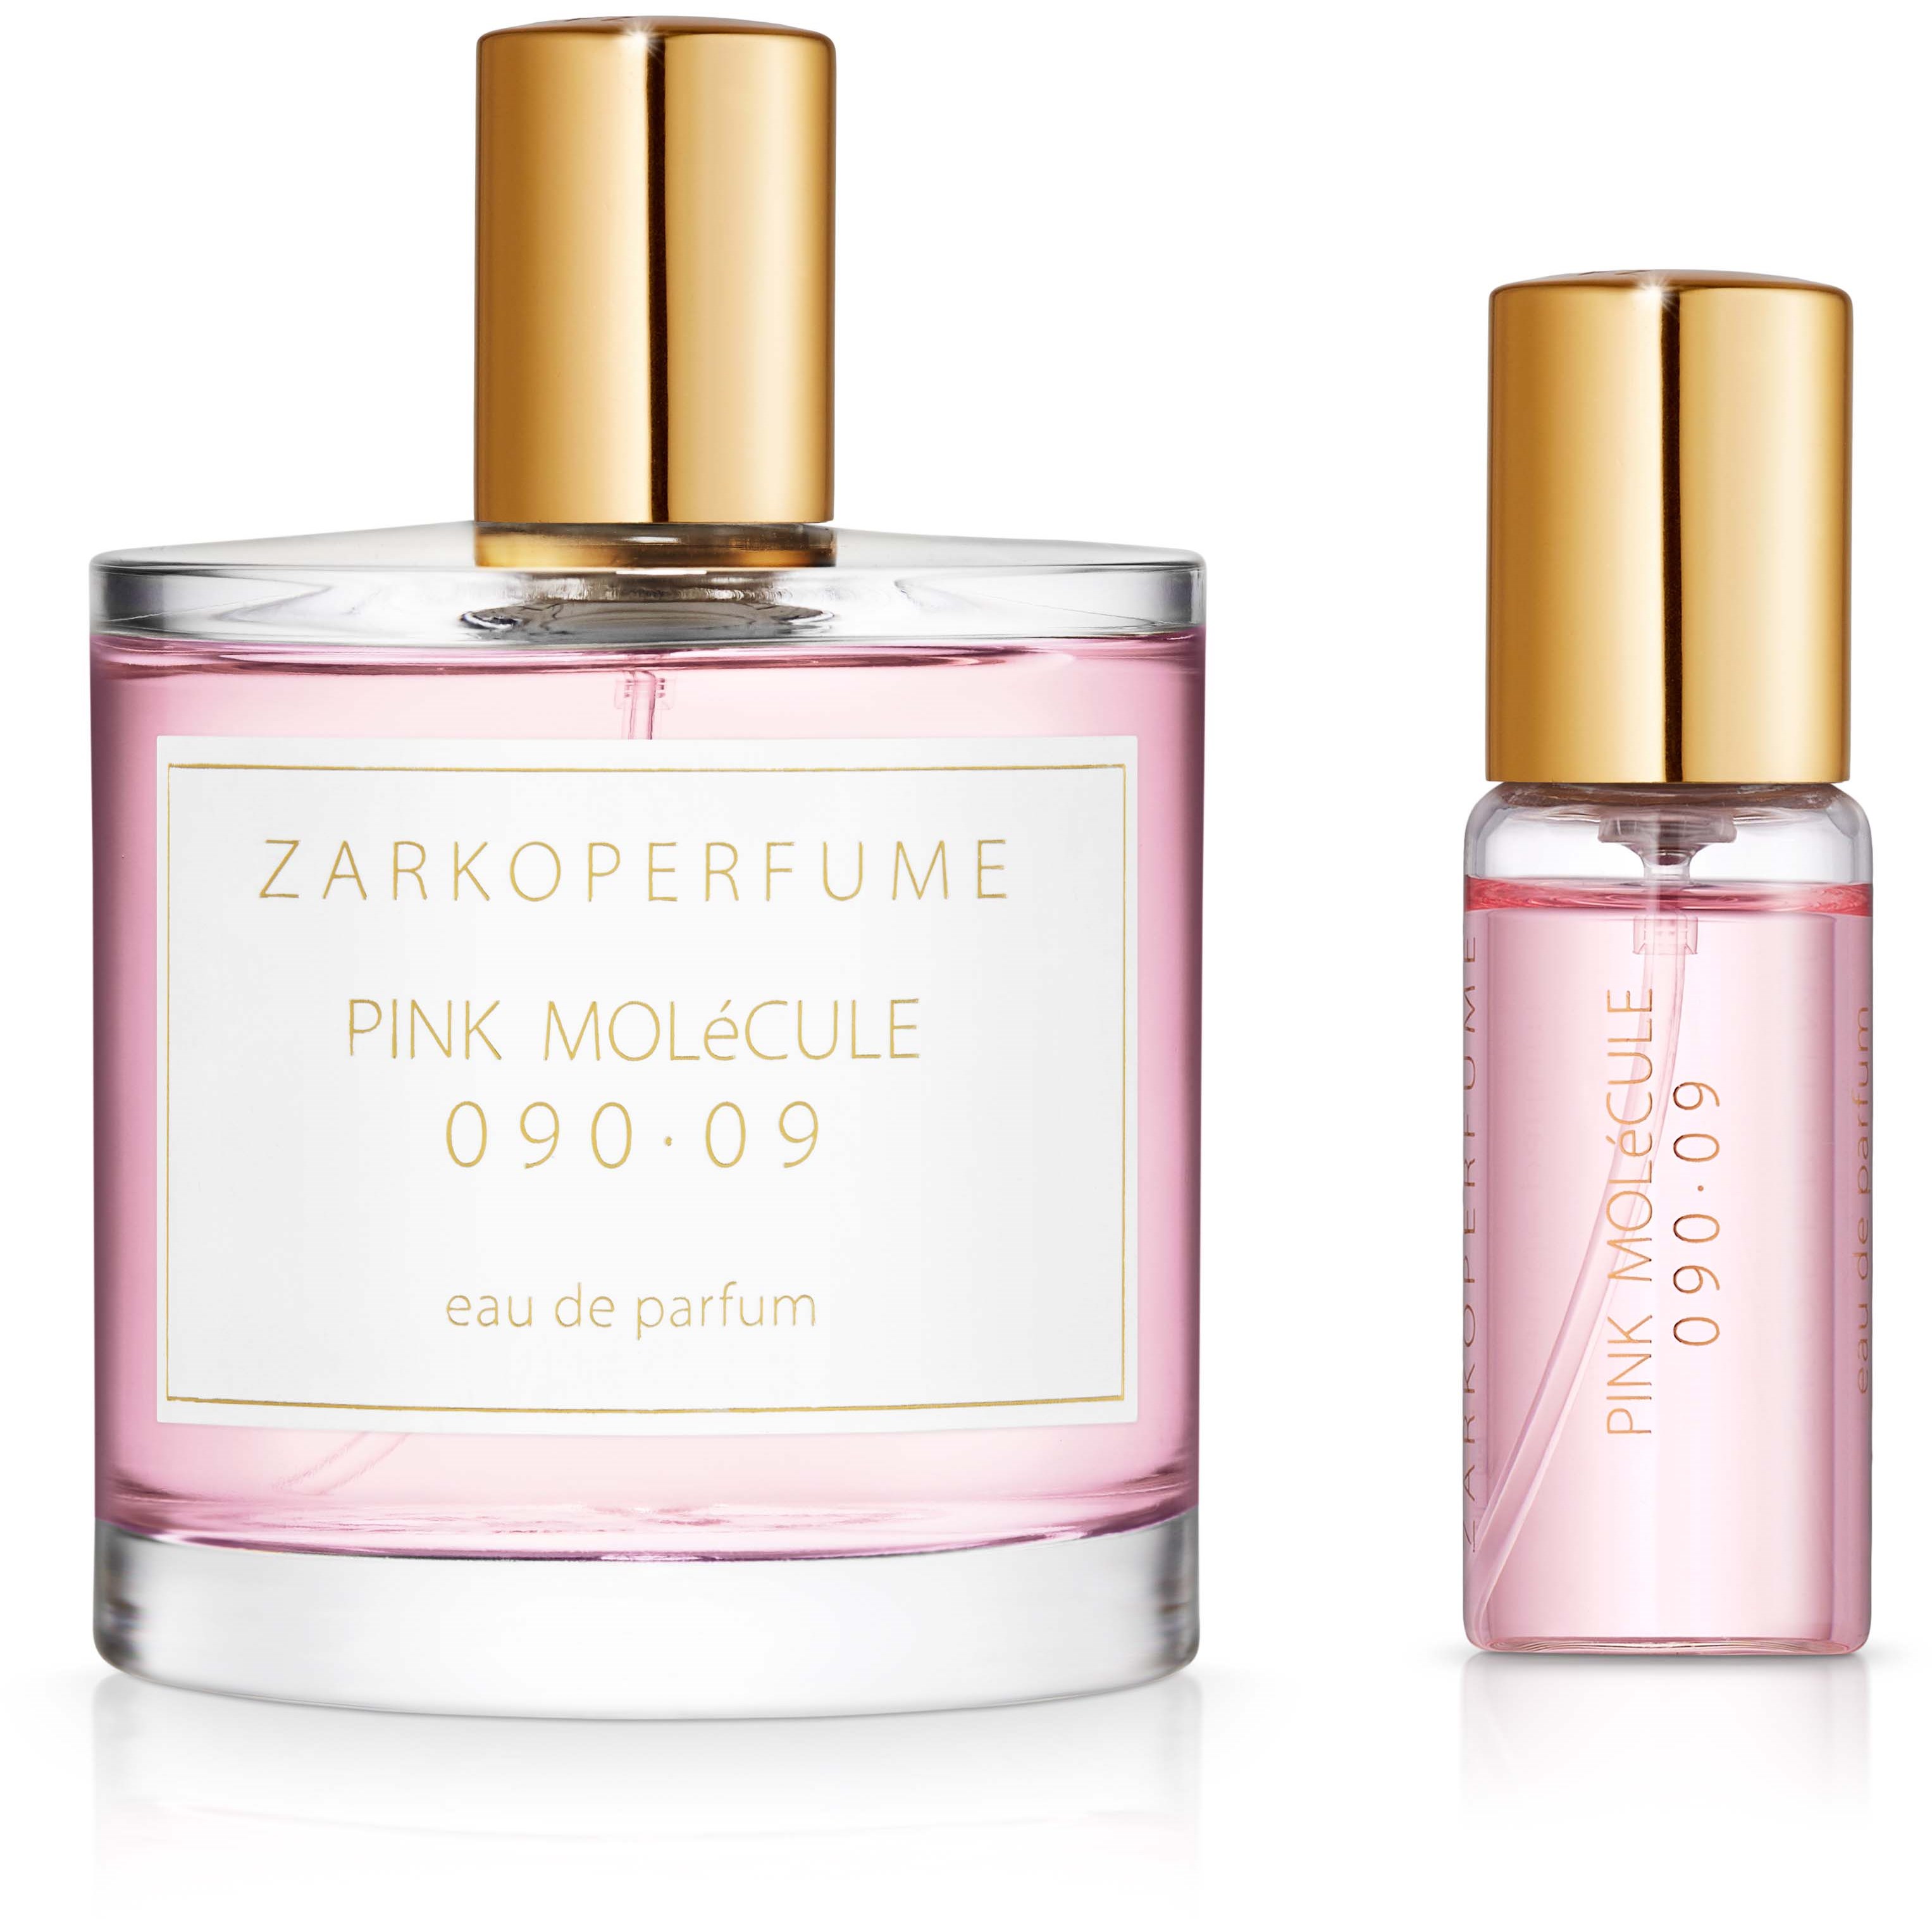 Zarkoperfume Twin Set